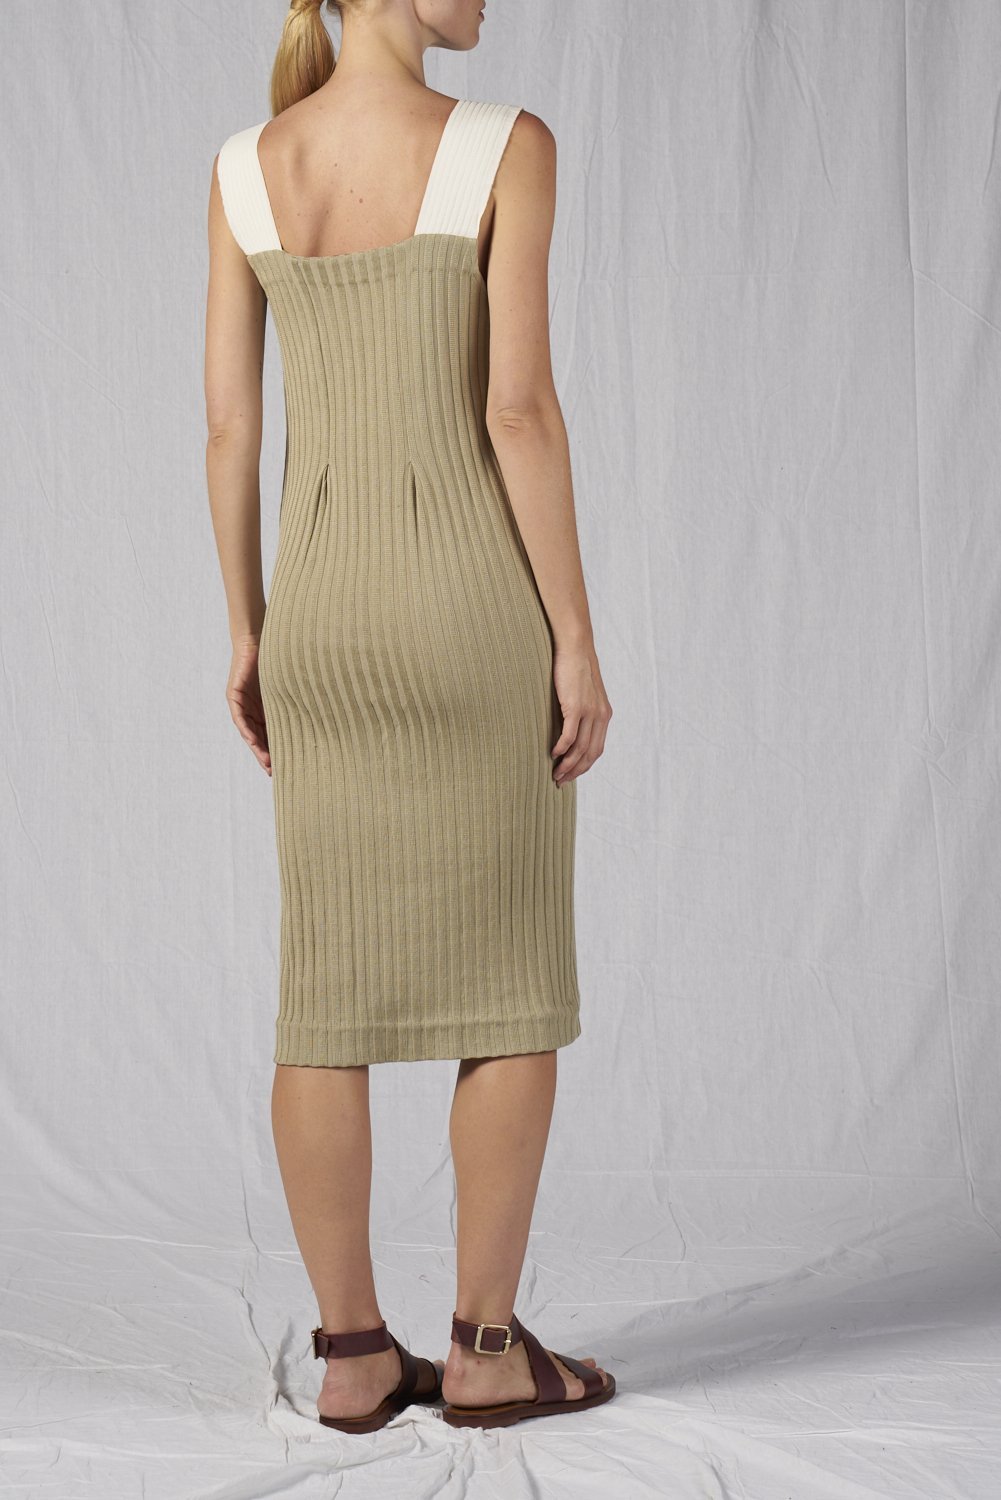 Stone Dress - Cora Bellotto - The Clothing LoungeCora Bellotto